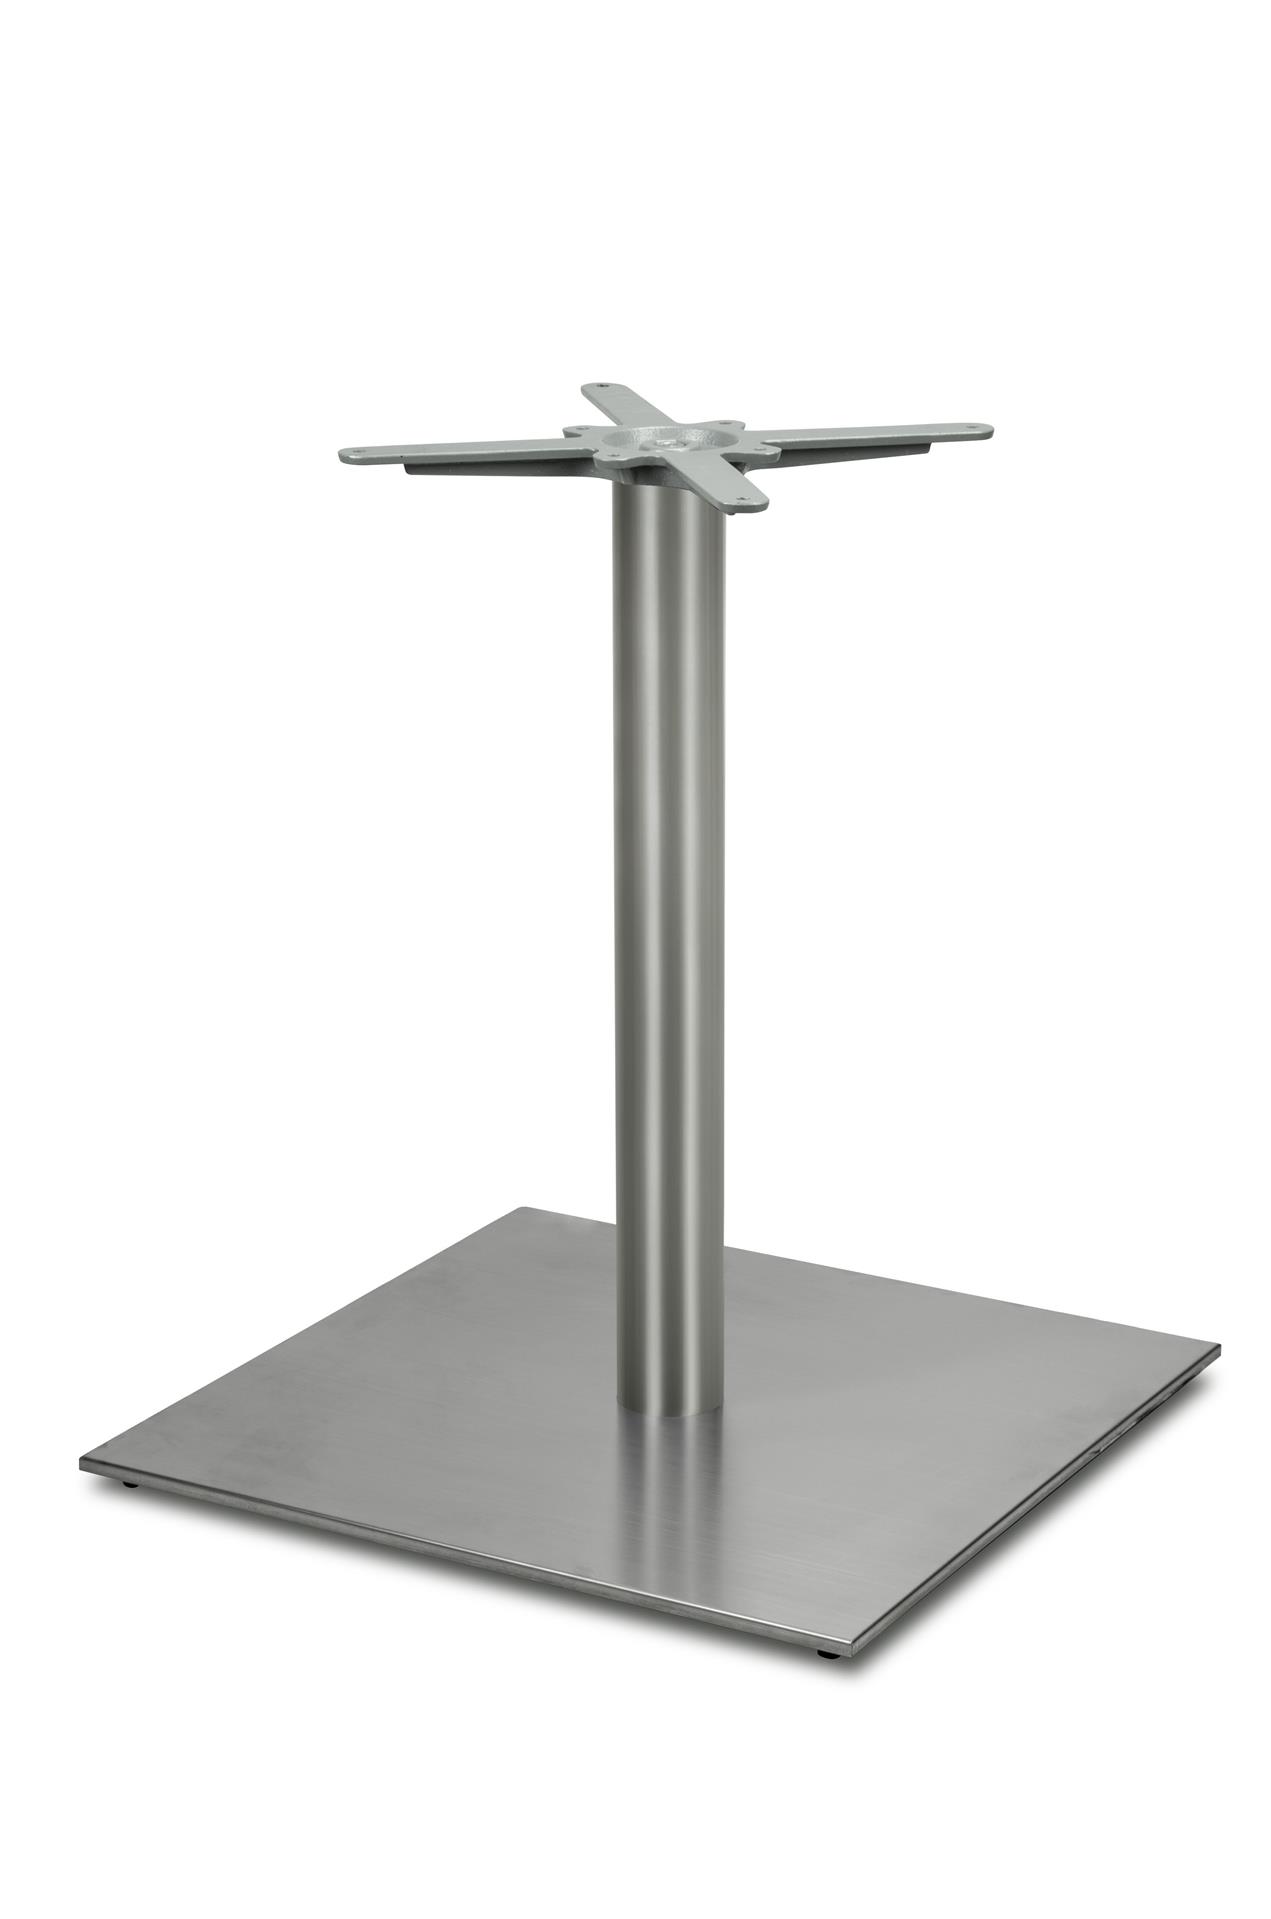 Tischgestell Edelstahl PD7096inox AISI 304 Premium - satiniert - matt